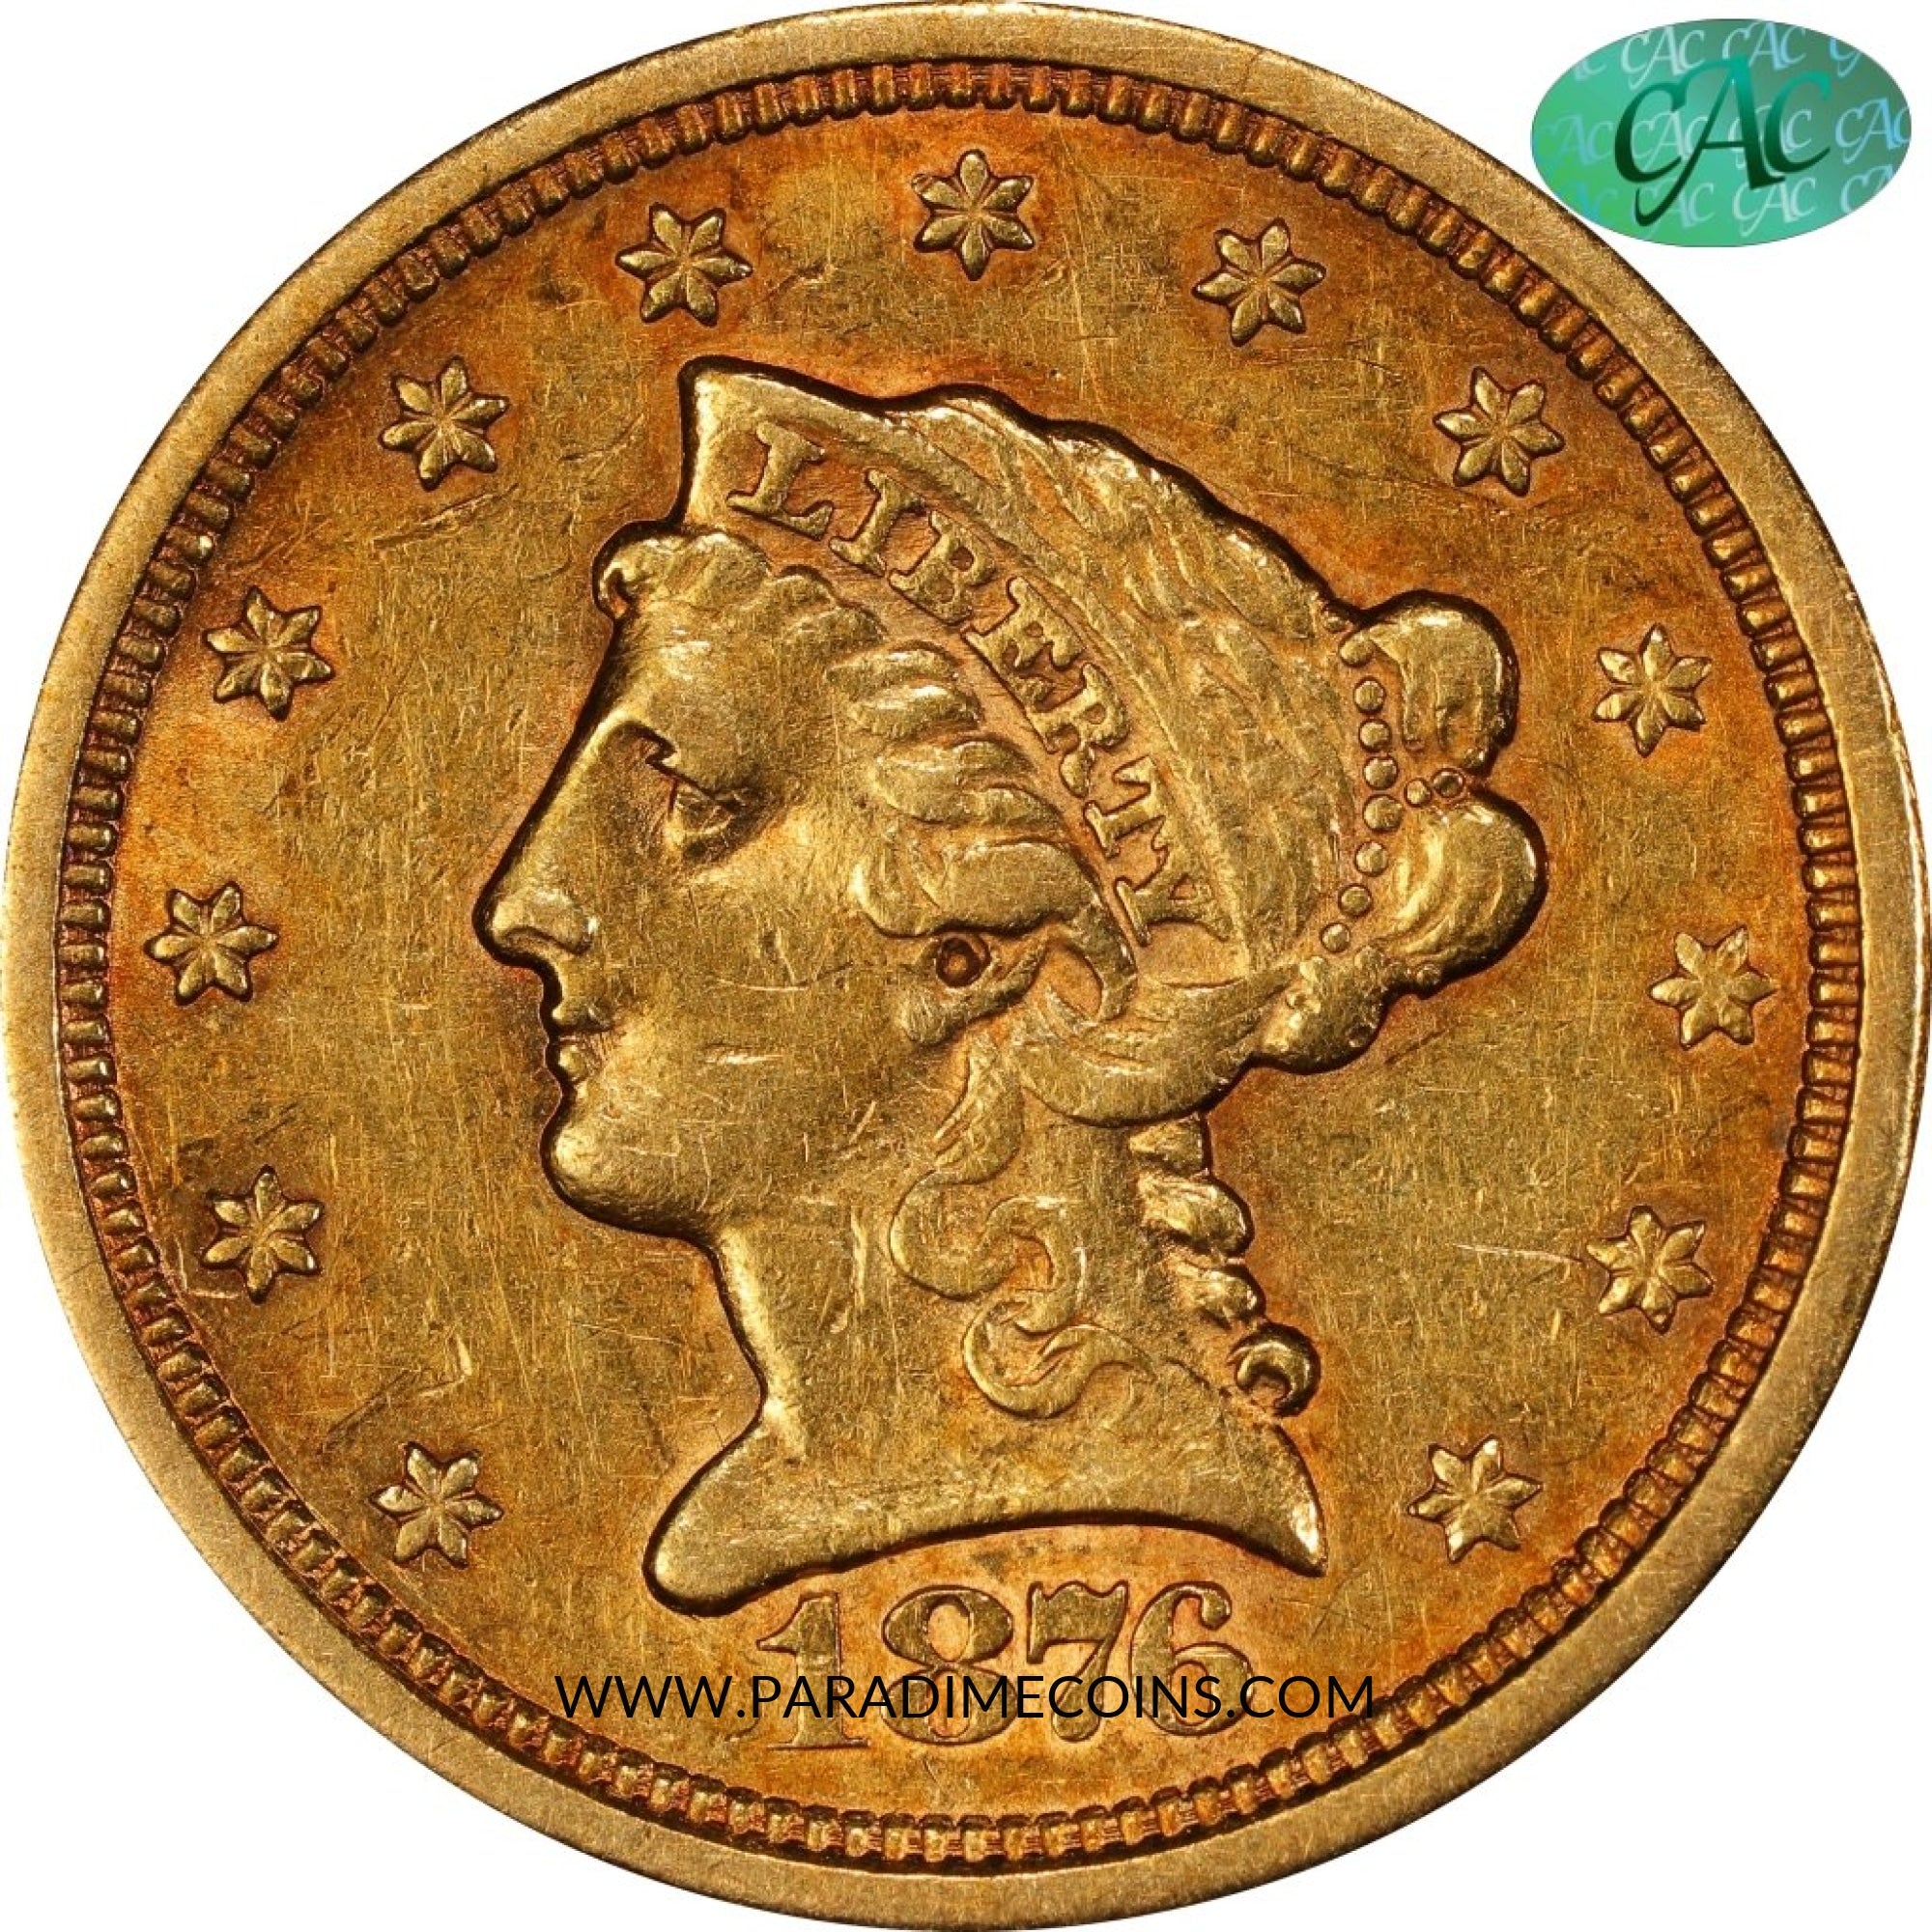 1876-S $2.5 AU50 PCGS CAC - Paradime Coins | PCGS NGC CACG CAC Rare US Numismatic Coins For Sale